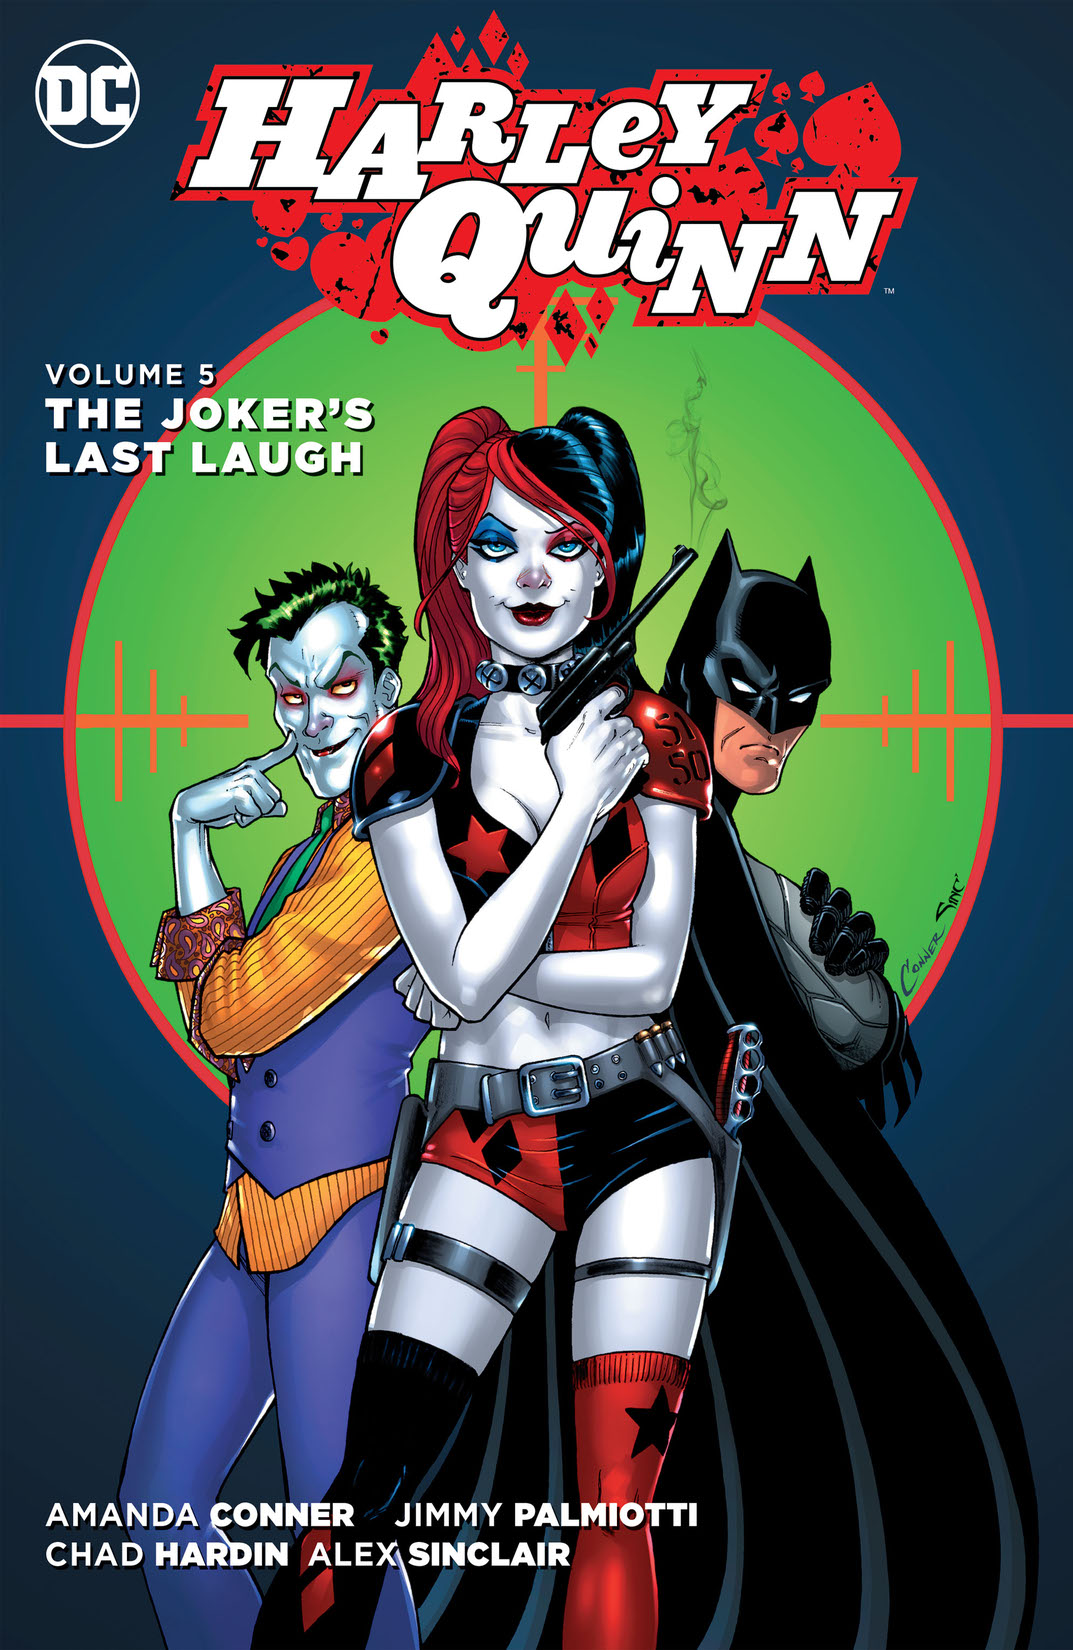 Harley Quinn Vol. 5: The Joker's Last Laugh preview images